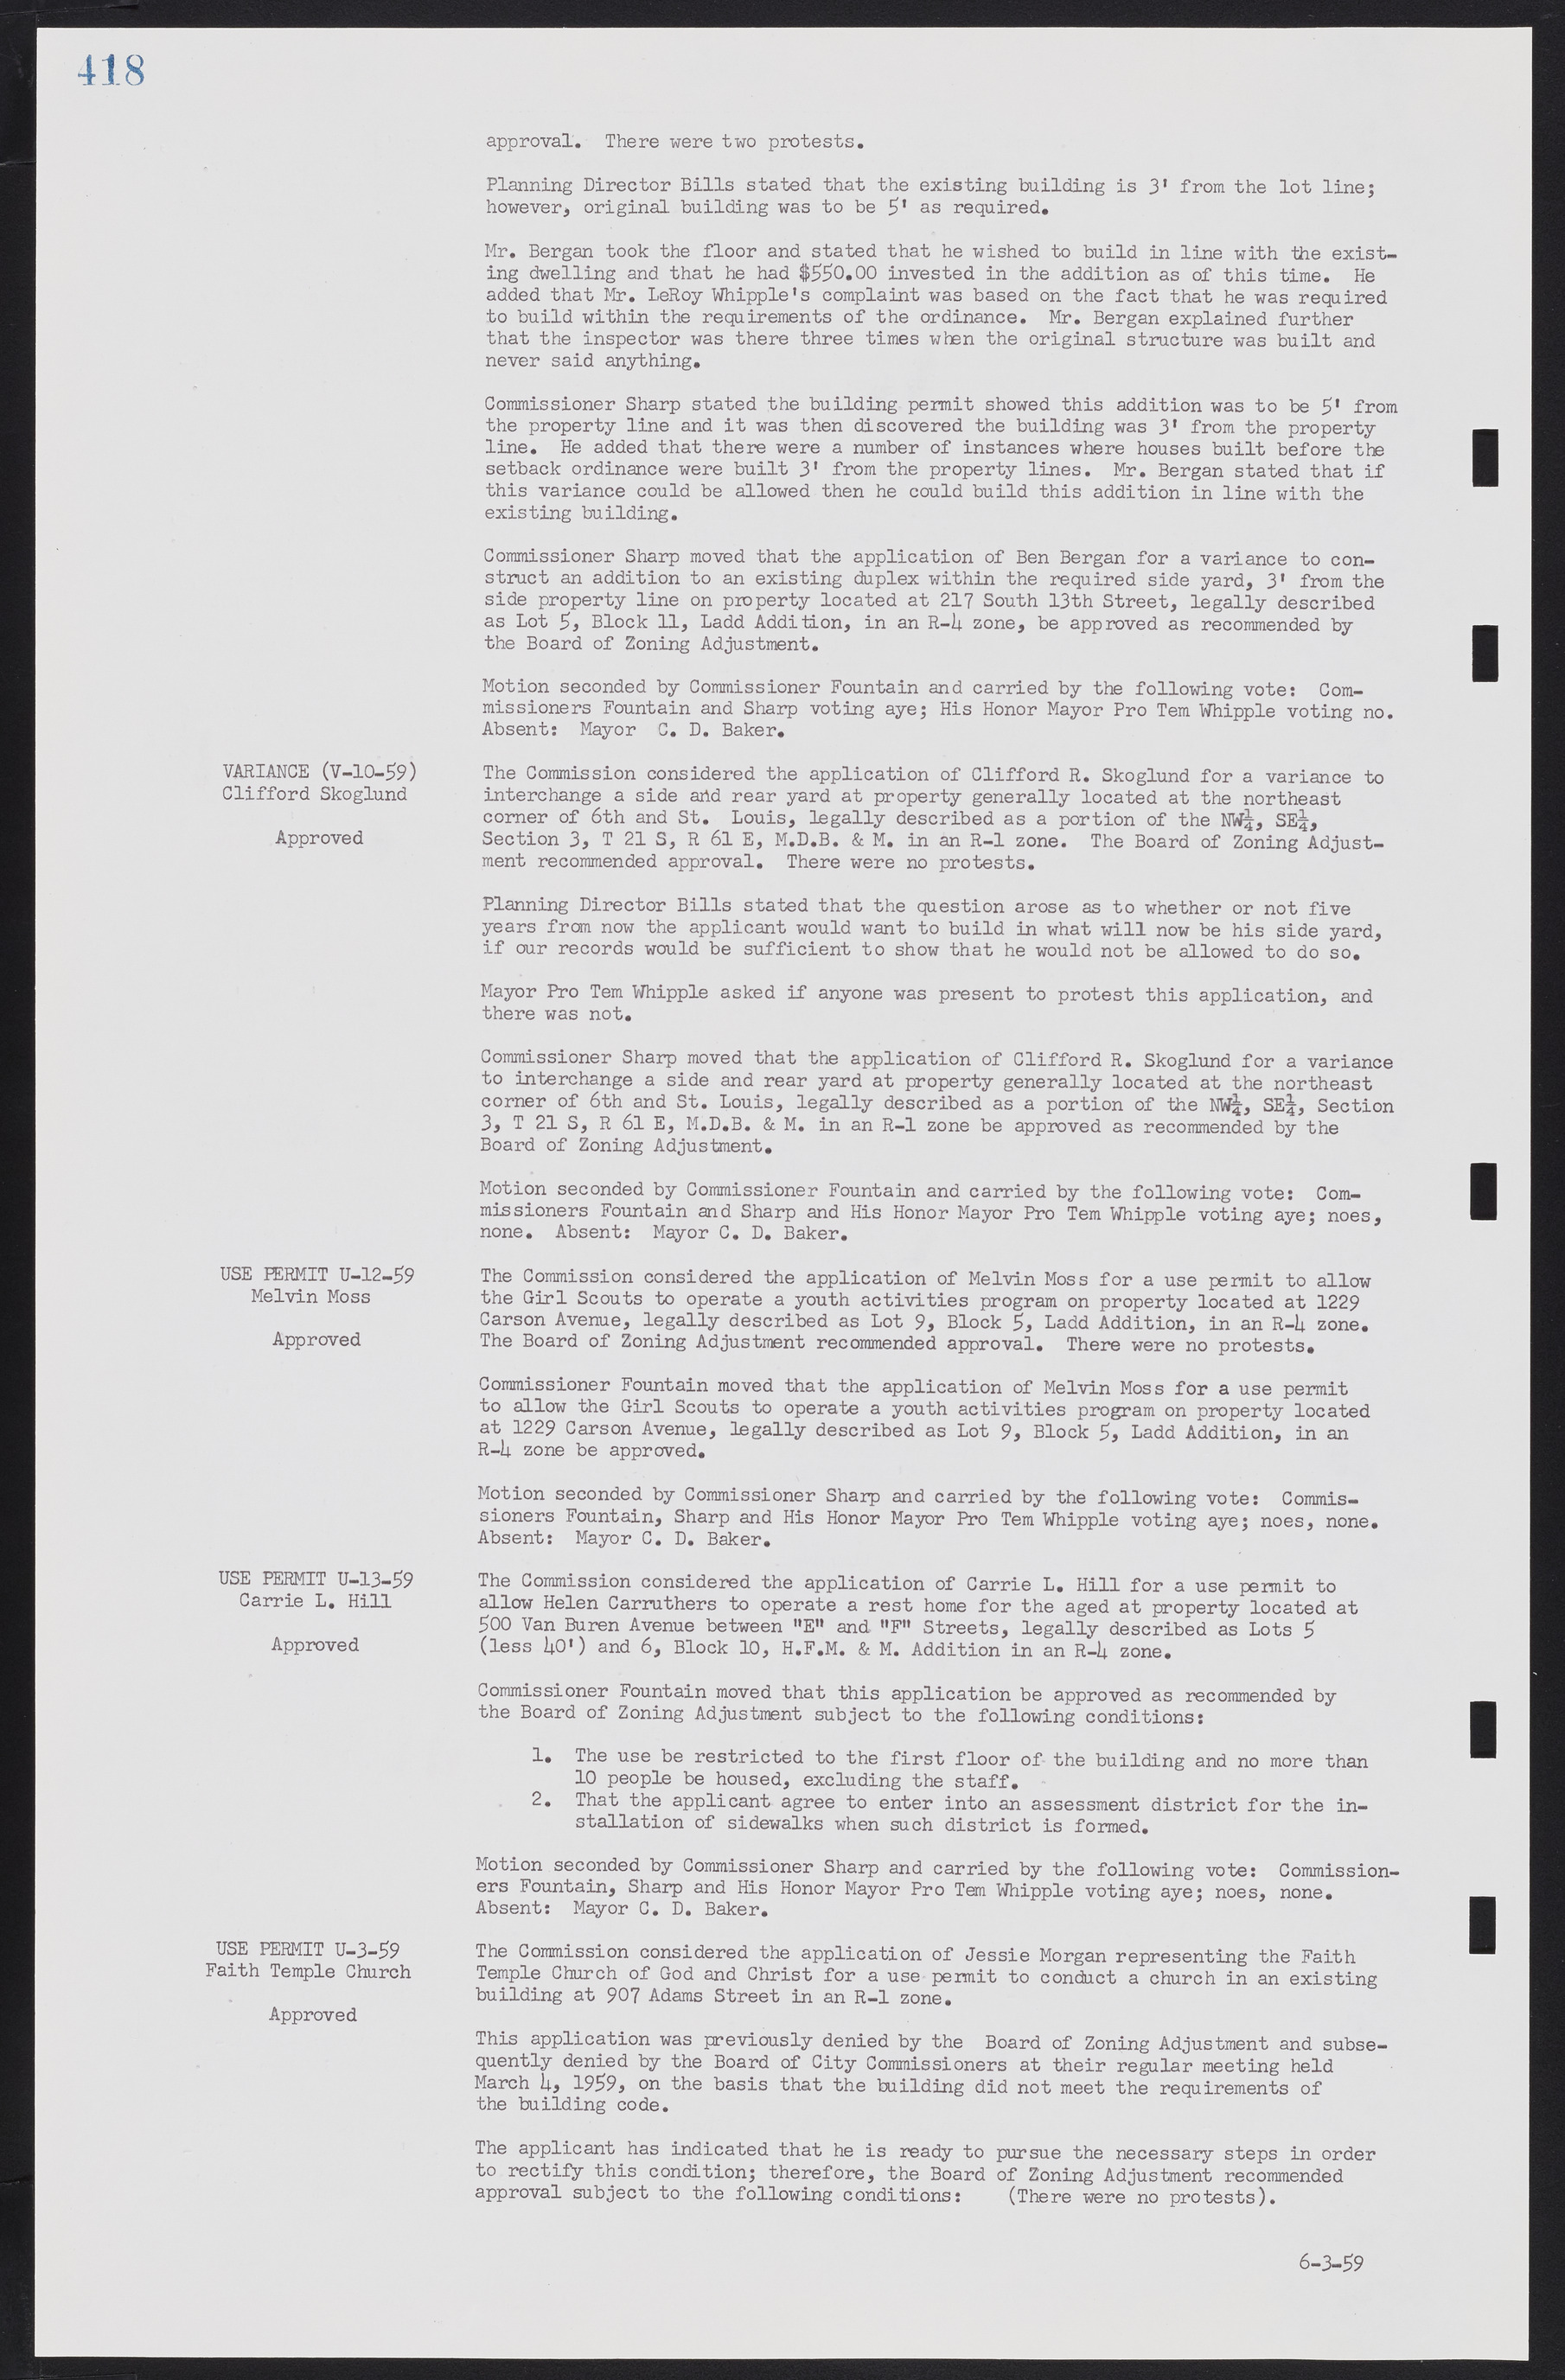 Las Vegas City Commission Minutes, November 20, 1957 to December 2, 1959, lvc000011-454